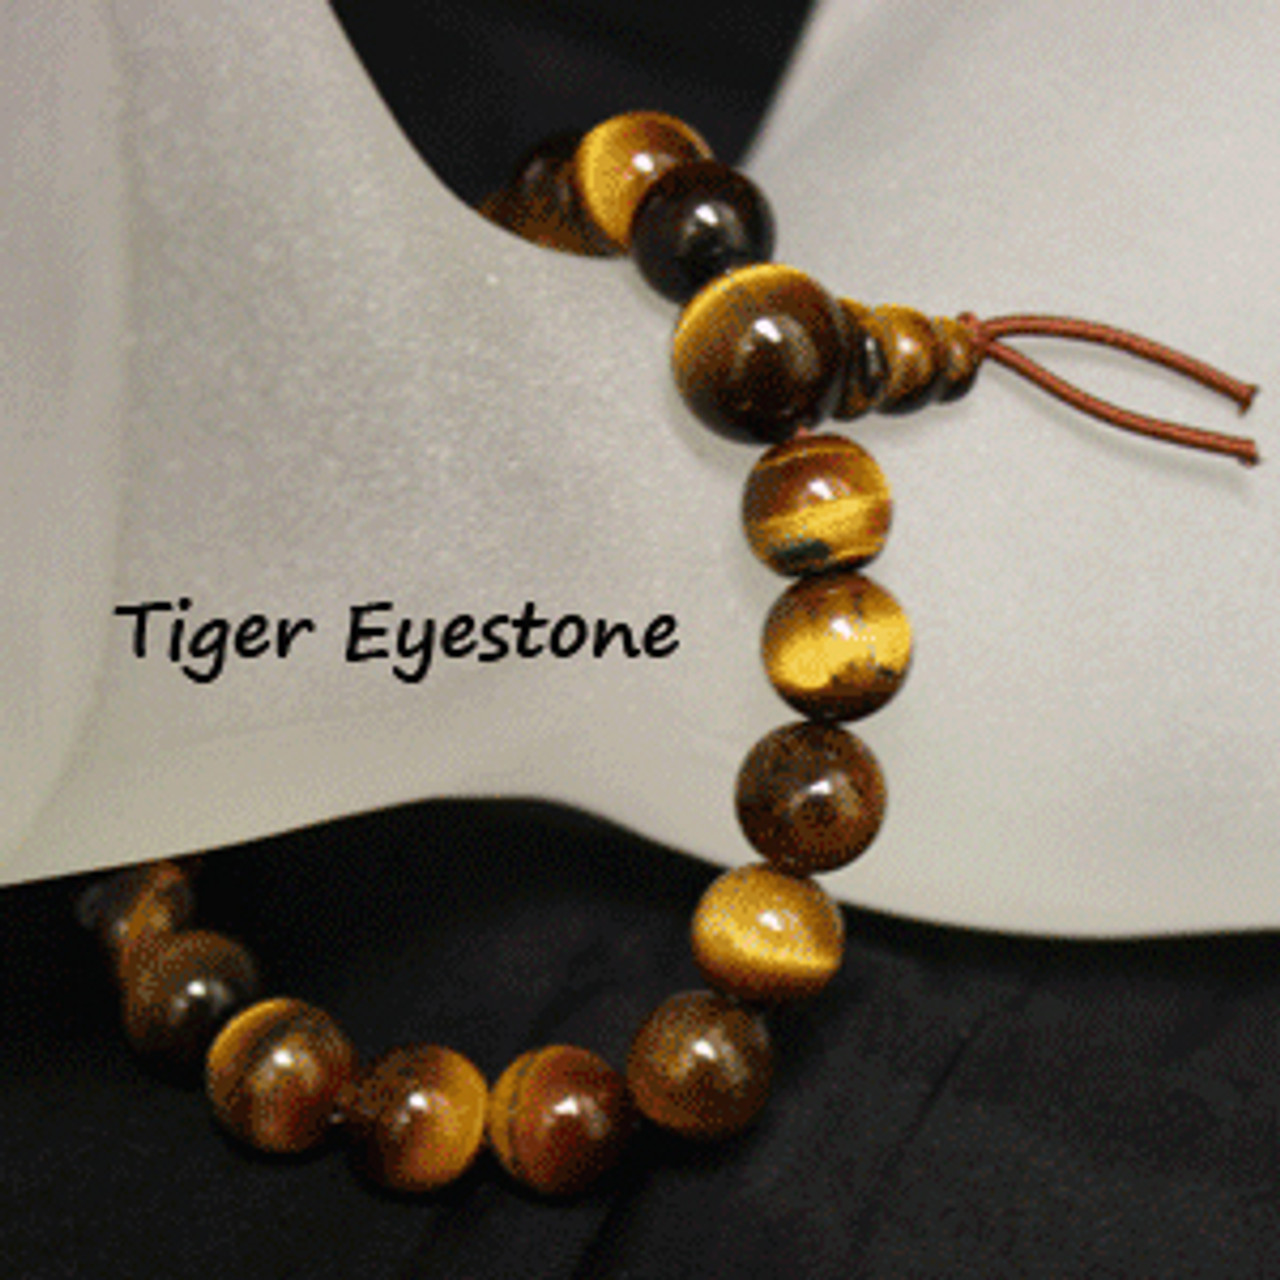 Tigers eye stone bracelet